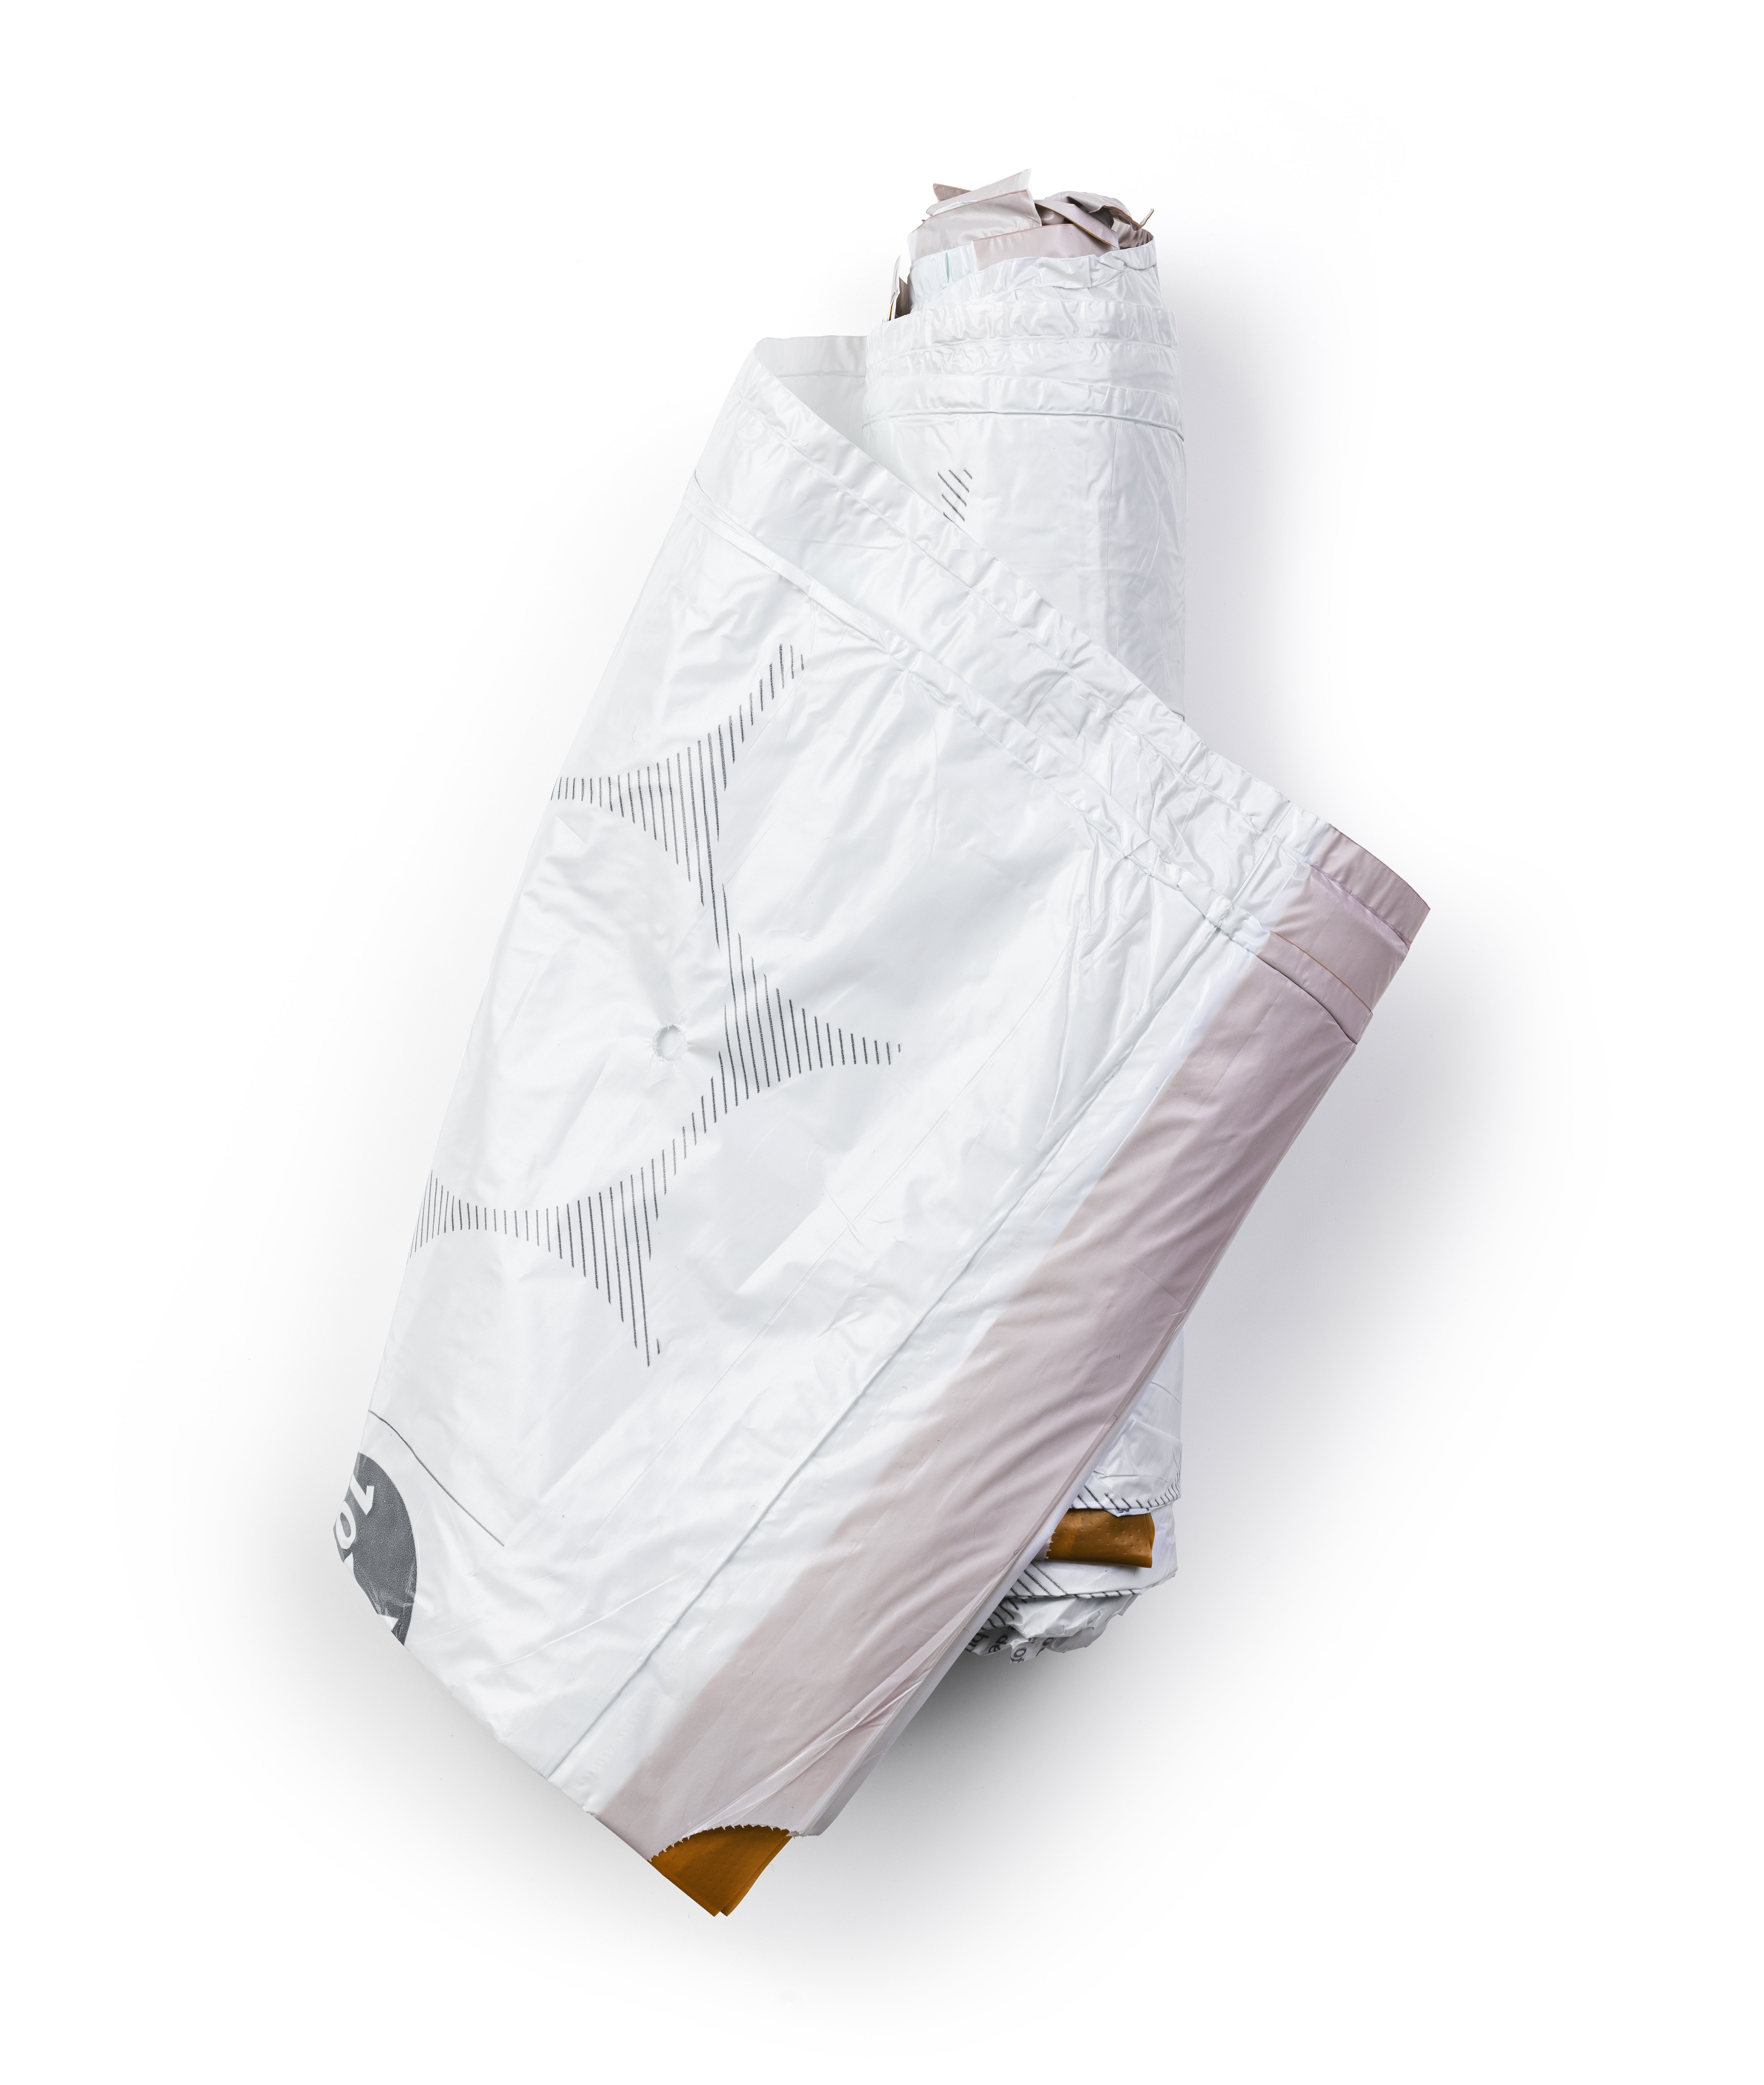 Brabantia PerfectFit Trash Bags, Code W, 1.3 Gallons, 5 Liter, 200